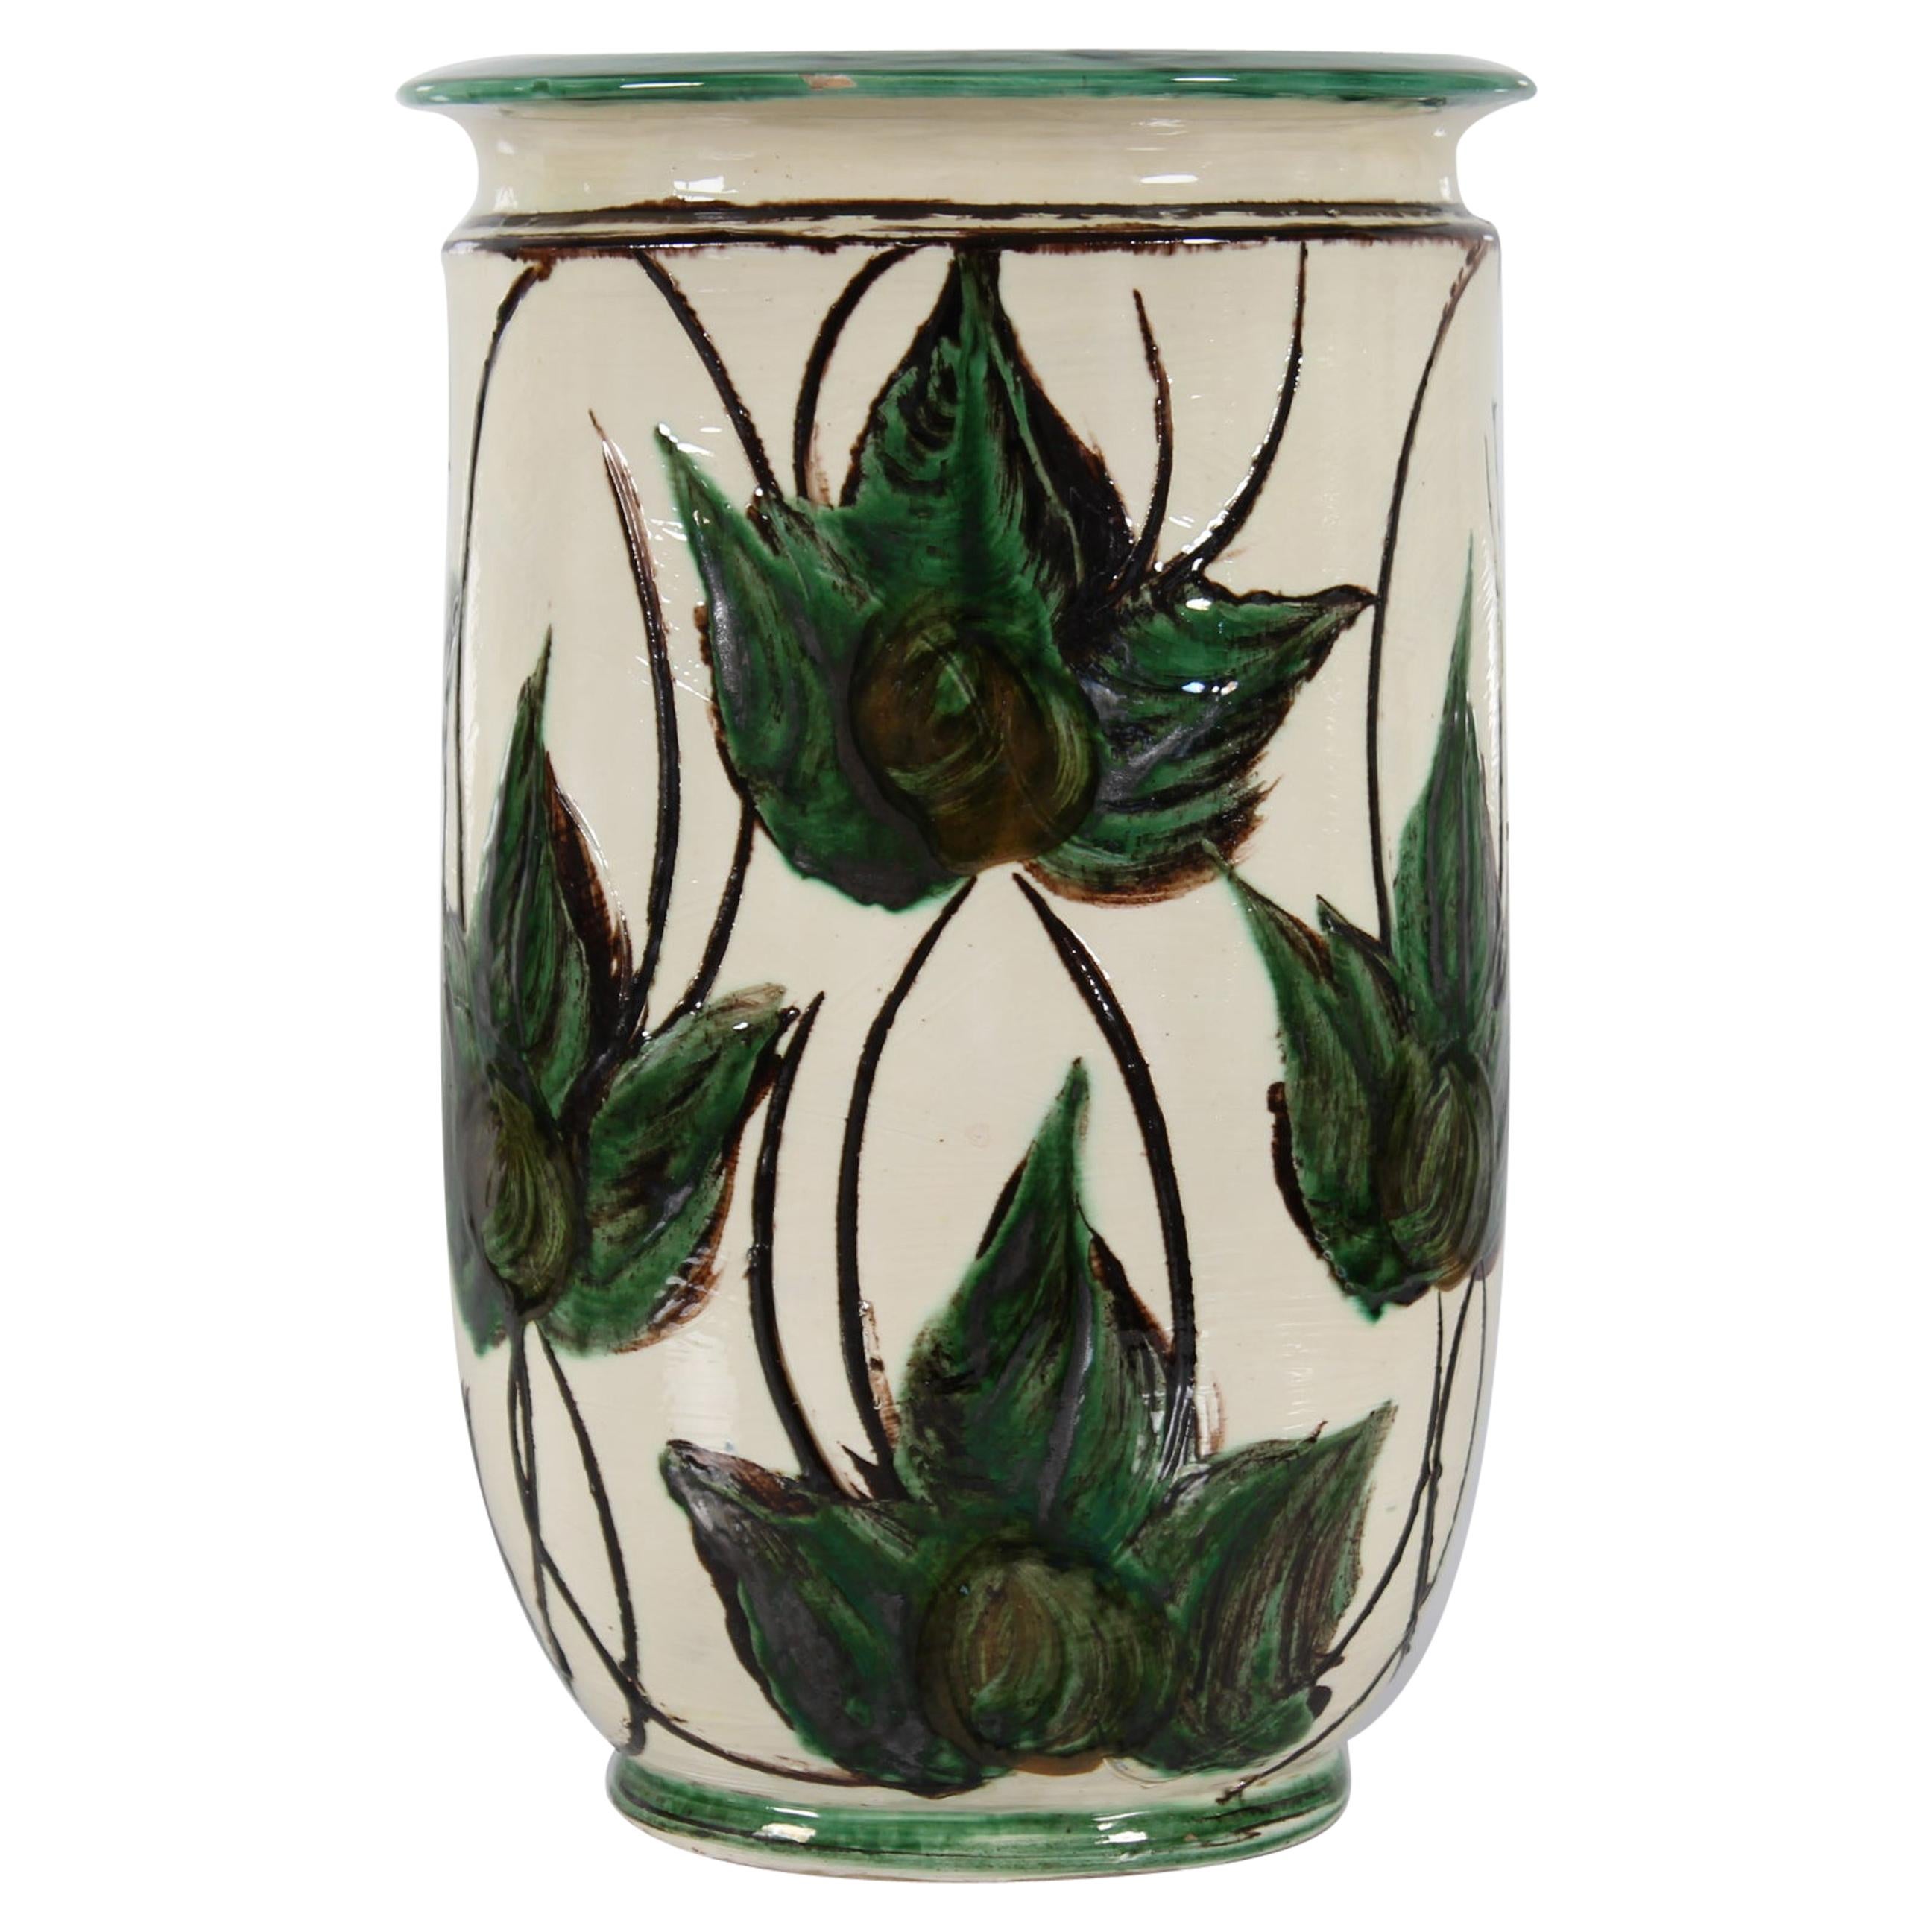 Huge Herman A Kähler Ceramic Floor Vase with Green Leaves, Early 20th Century